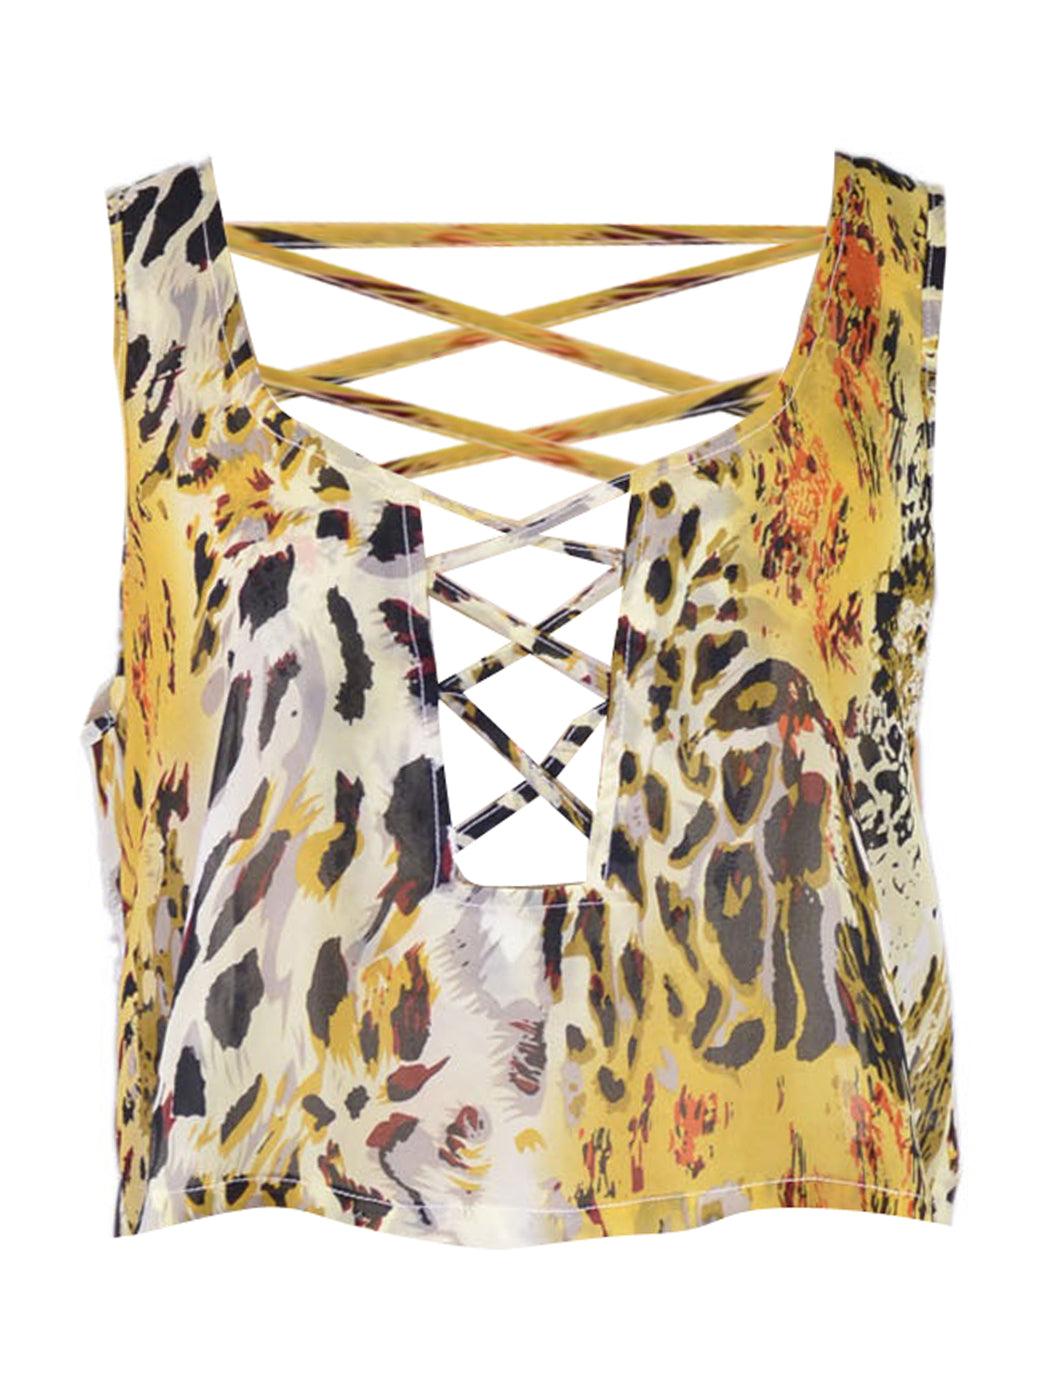 Uniq Animalistic Cheetah Print Criss Cross Neck Detail Chiffon Blouse Top